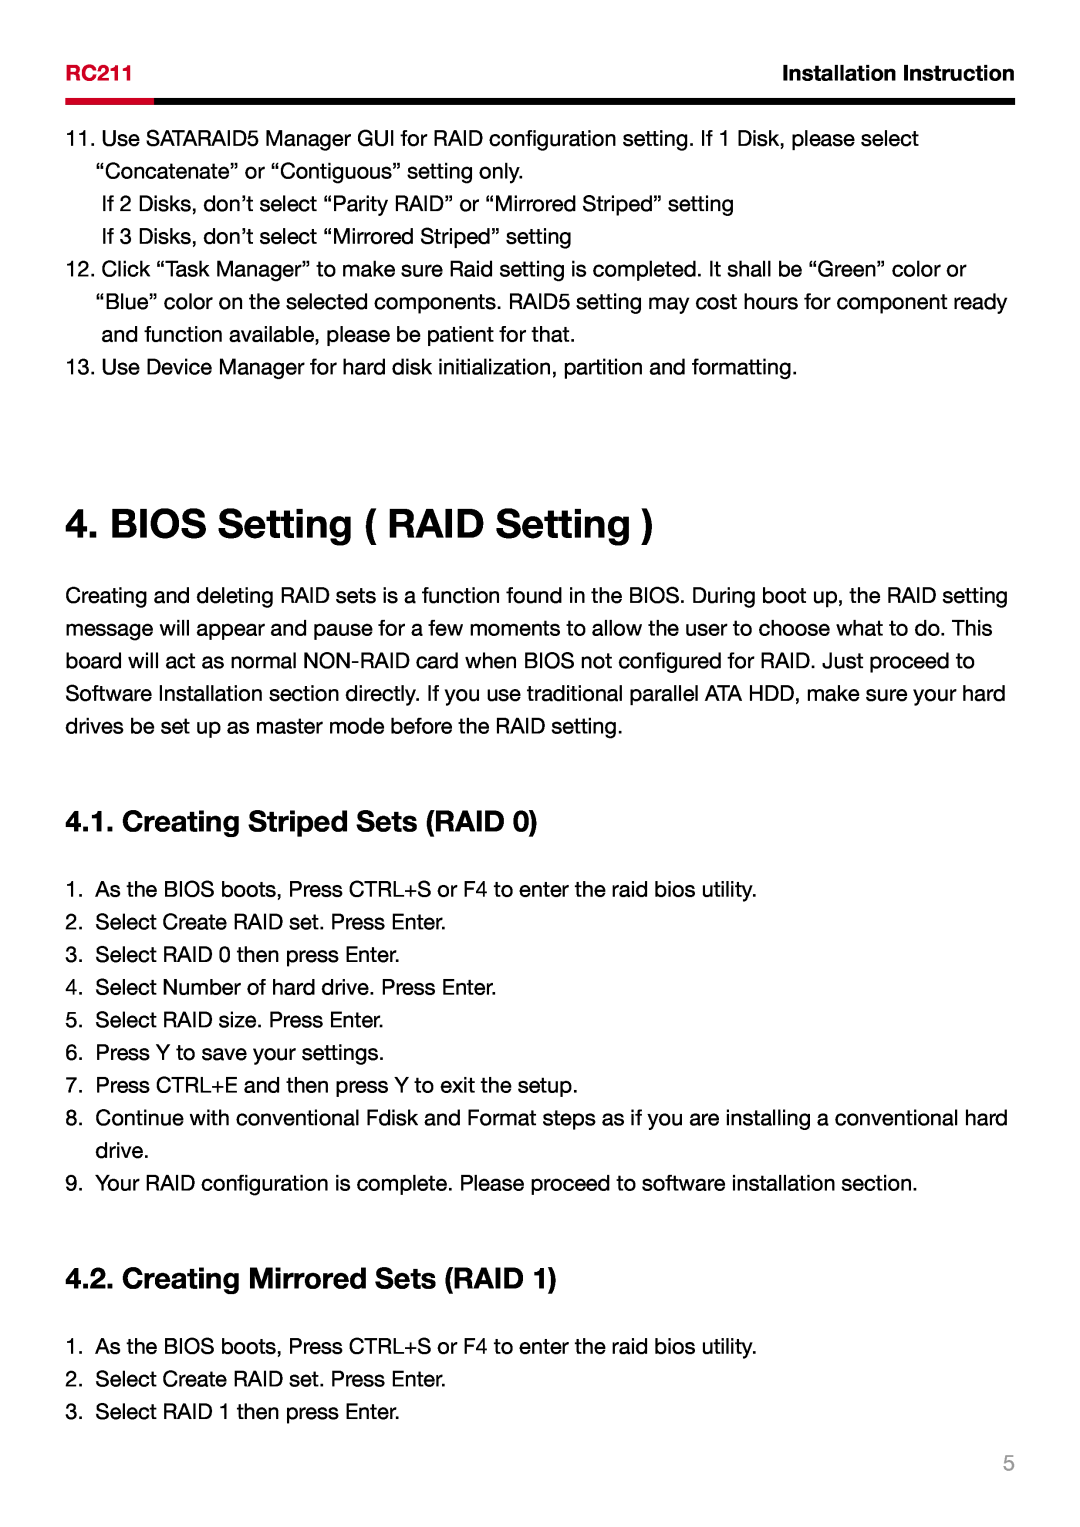 Rosewill RC211 user manual BIOS Setting RAID Setting, Creating Striped Sets RAID, Creating Mirrored Sets RAID 